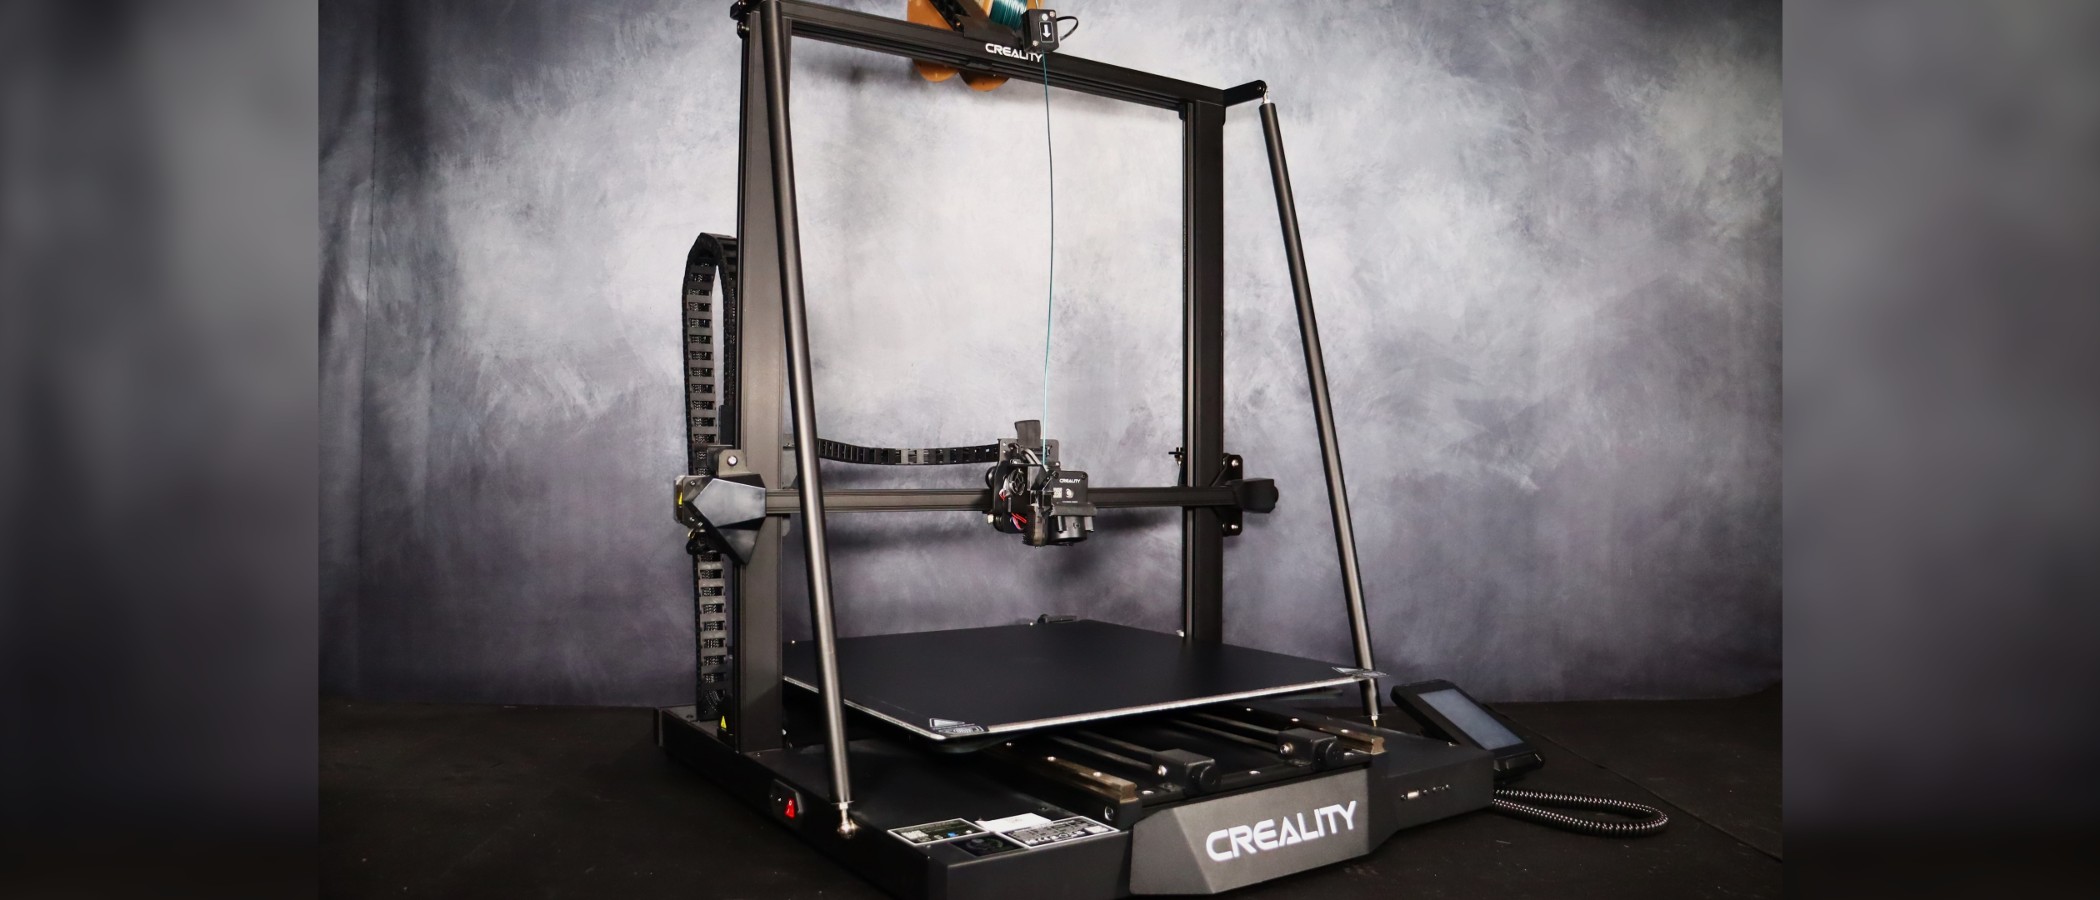 Creality CR-10 Full Review - BEST 3D PRINTER!!! 